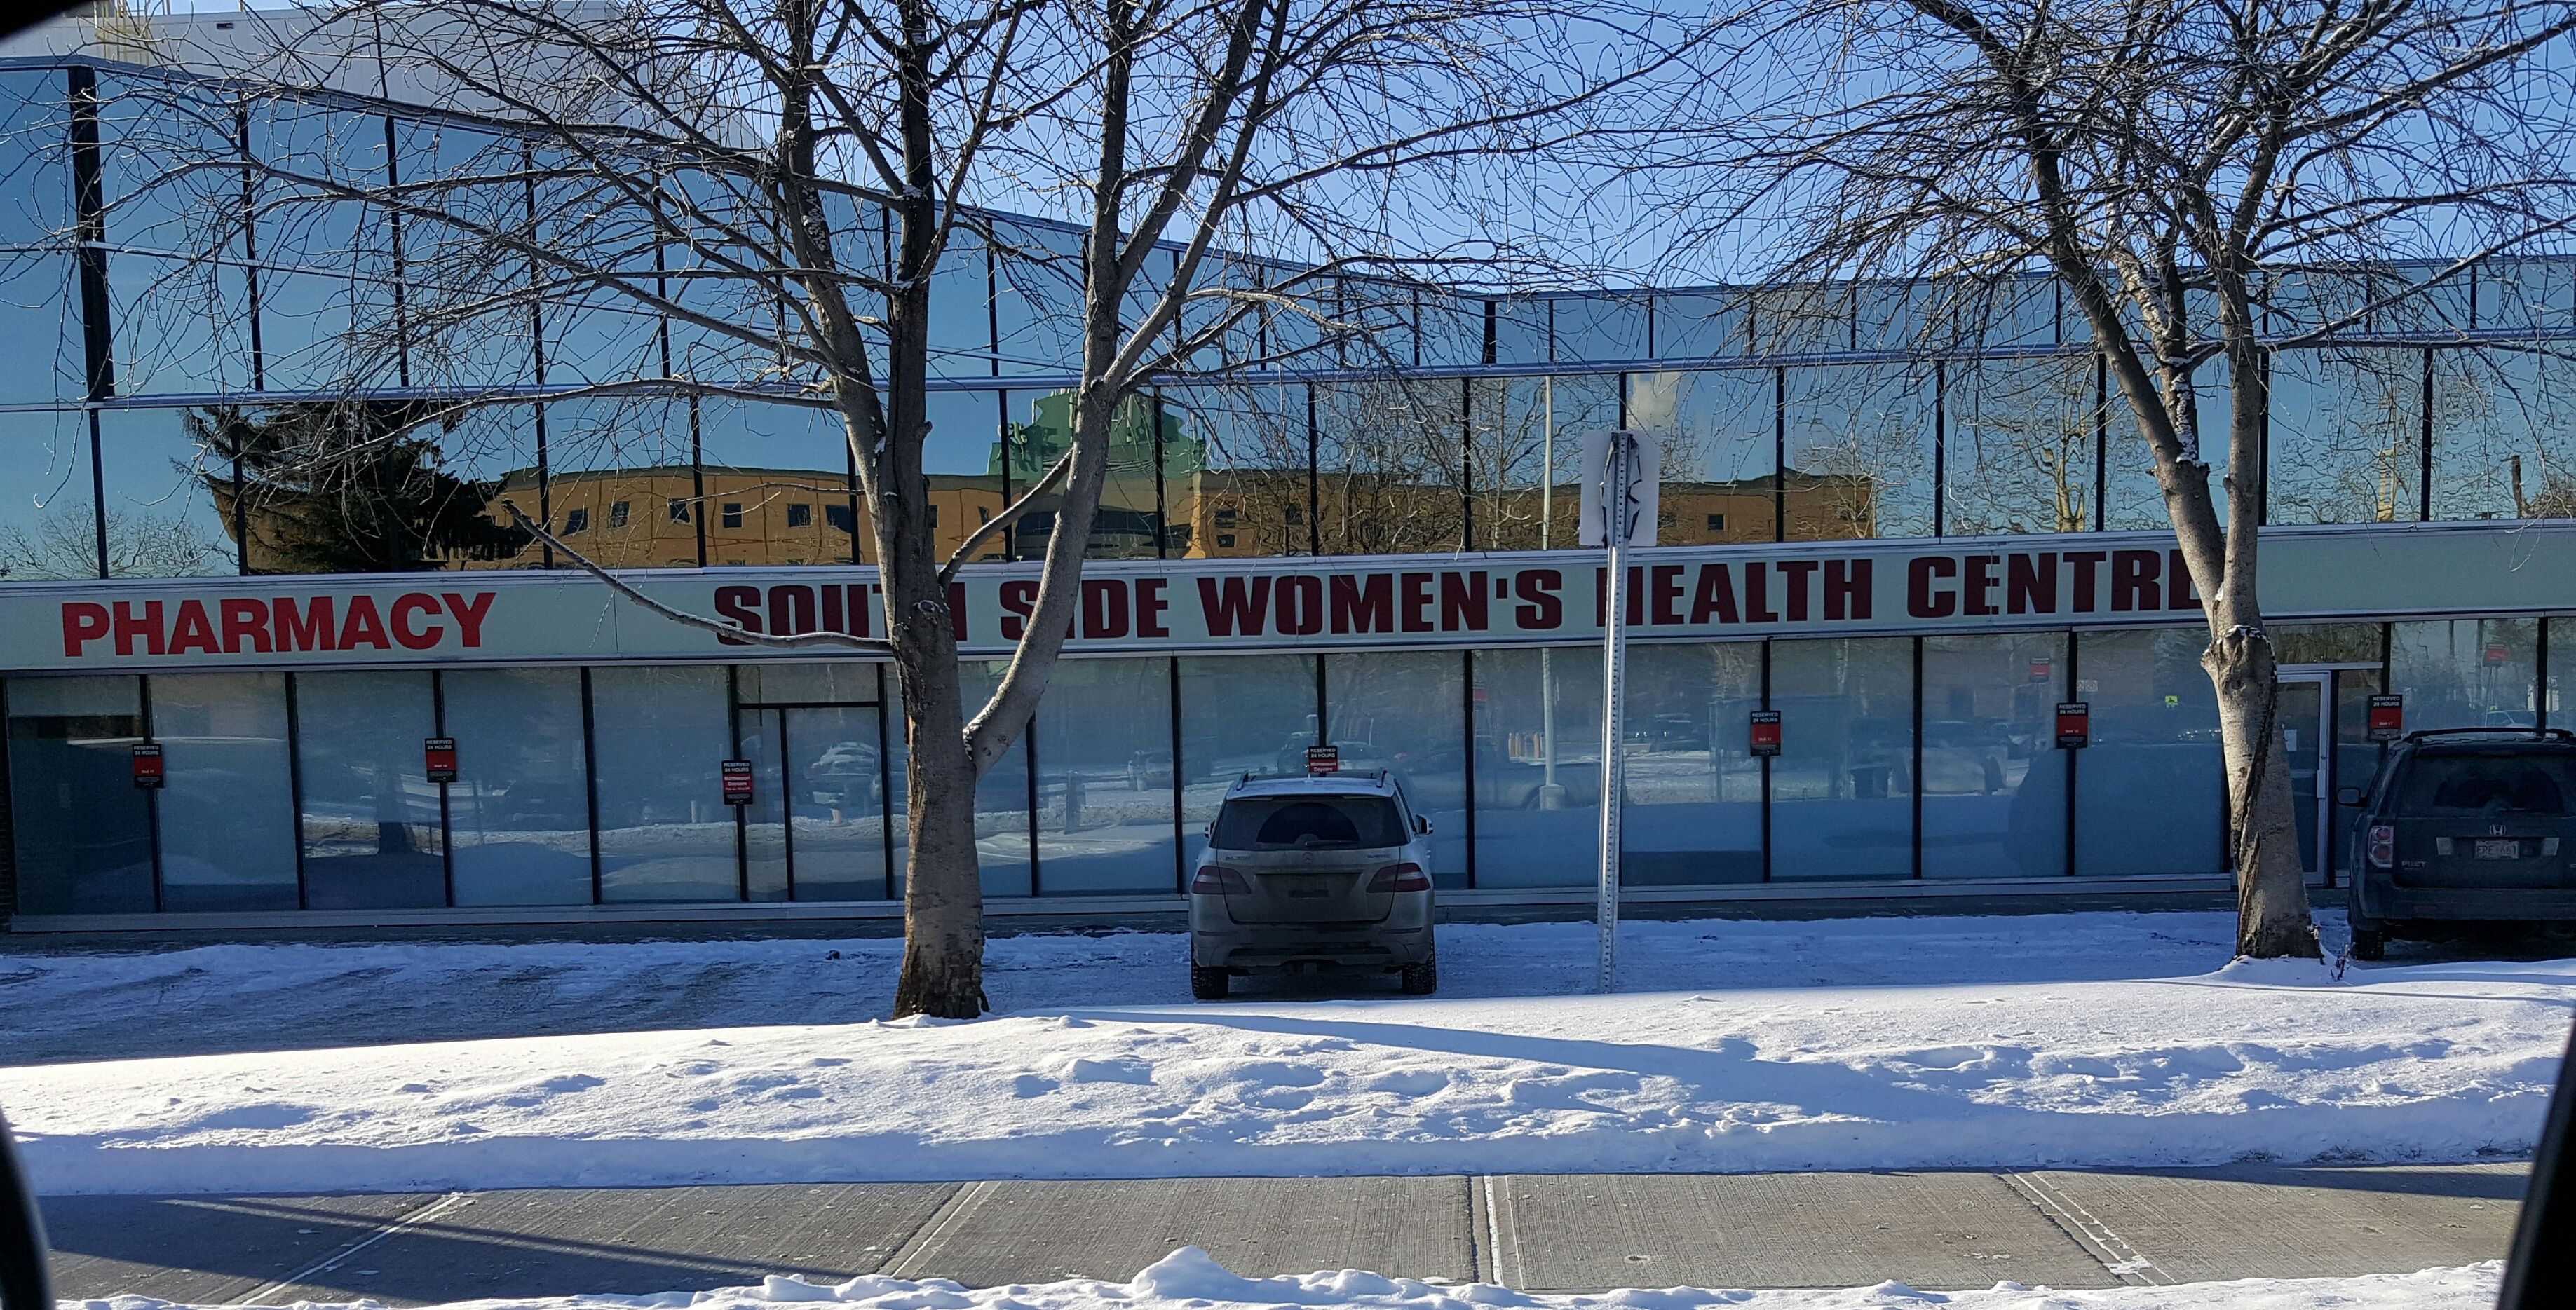 South Side Women's Health Centre